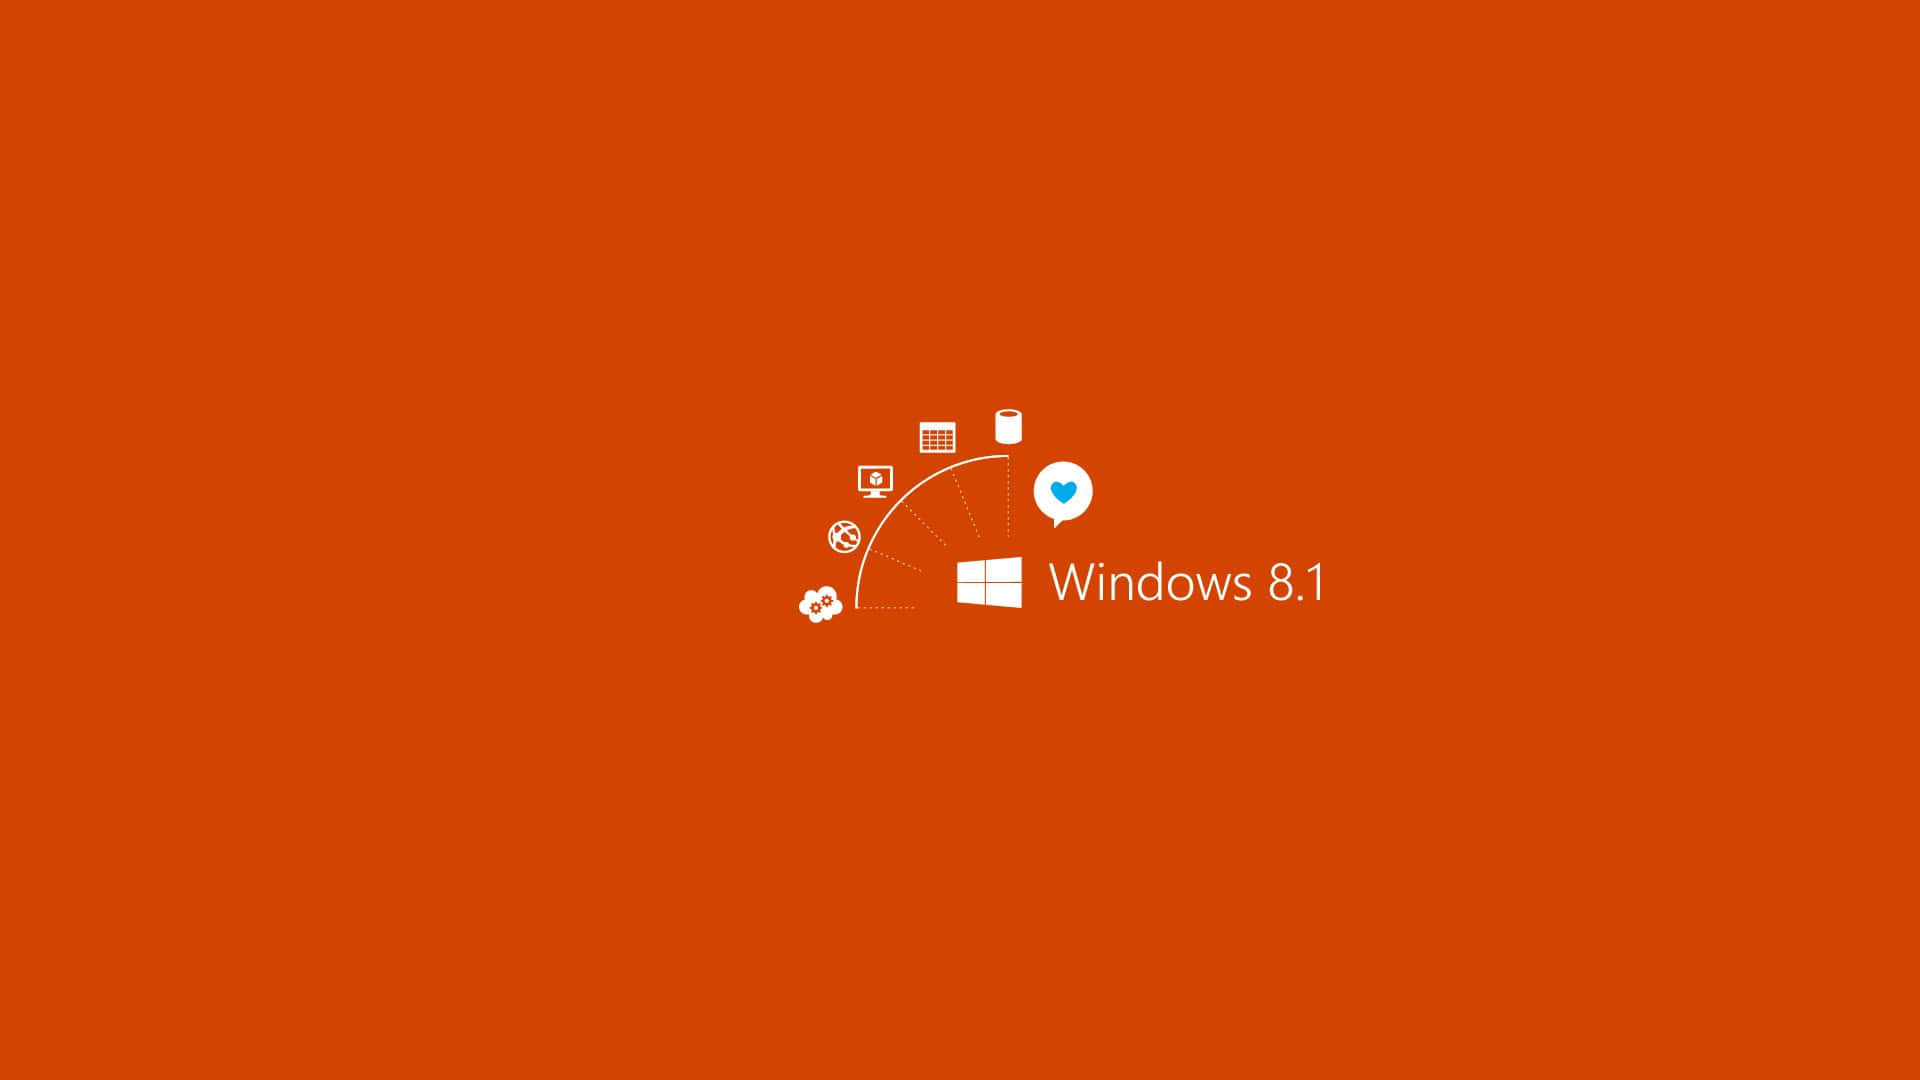 Windows8 Baggrund I Størrelsen 1920 X 1080